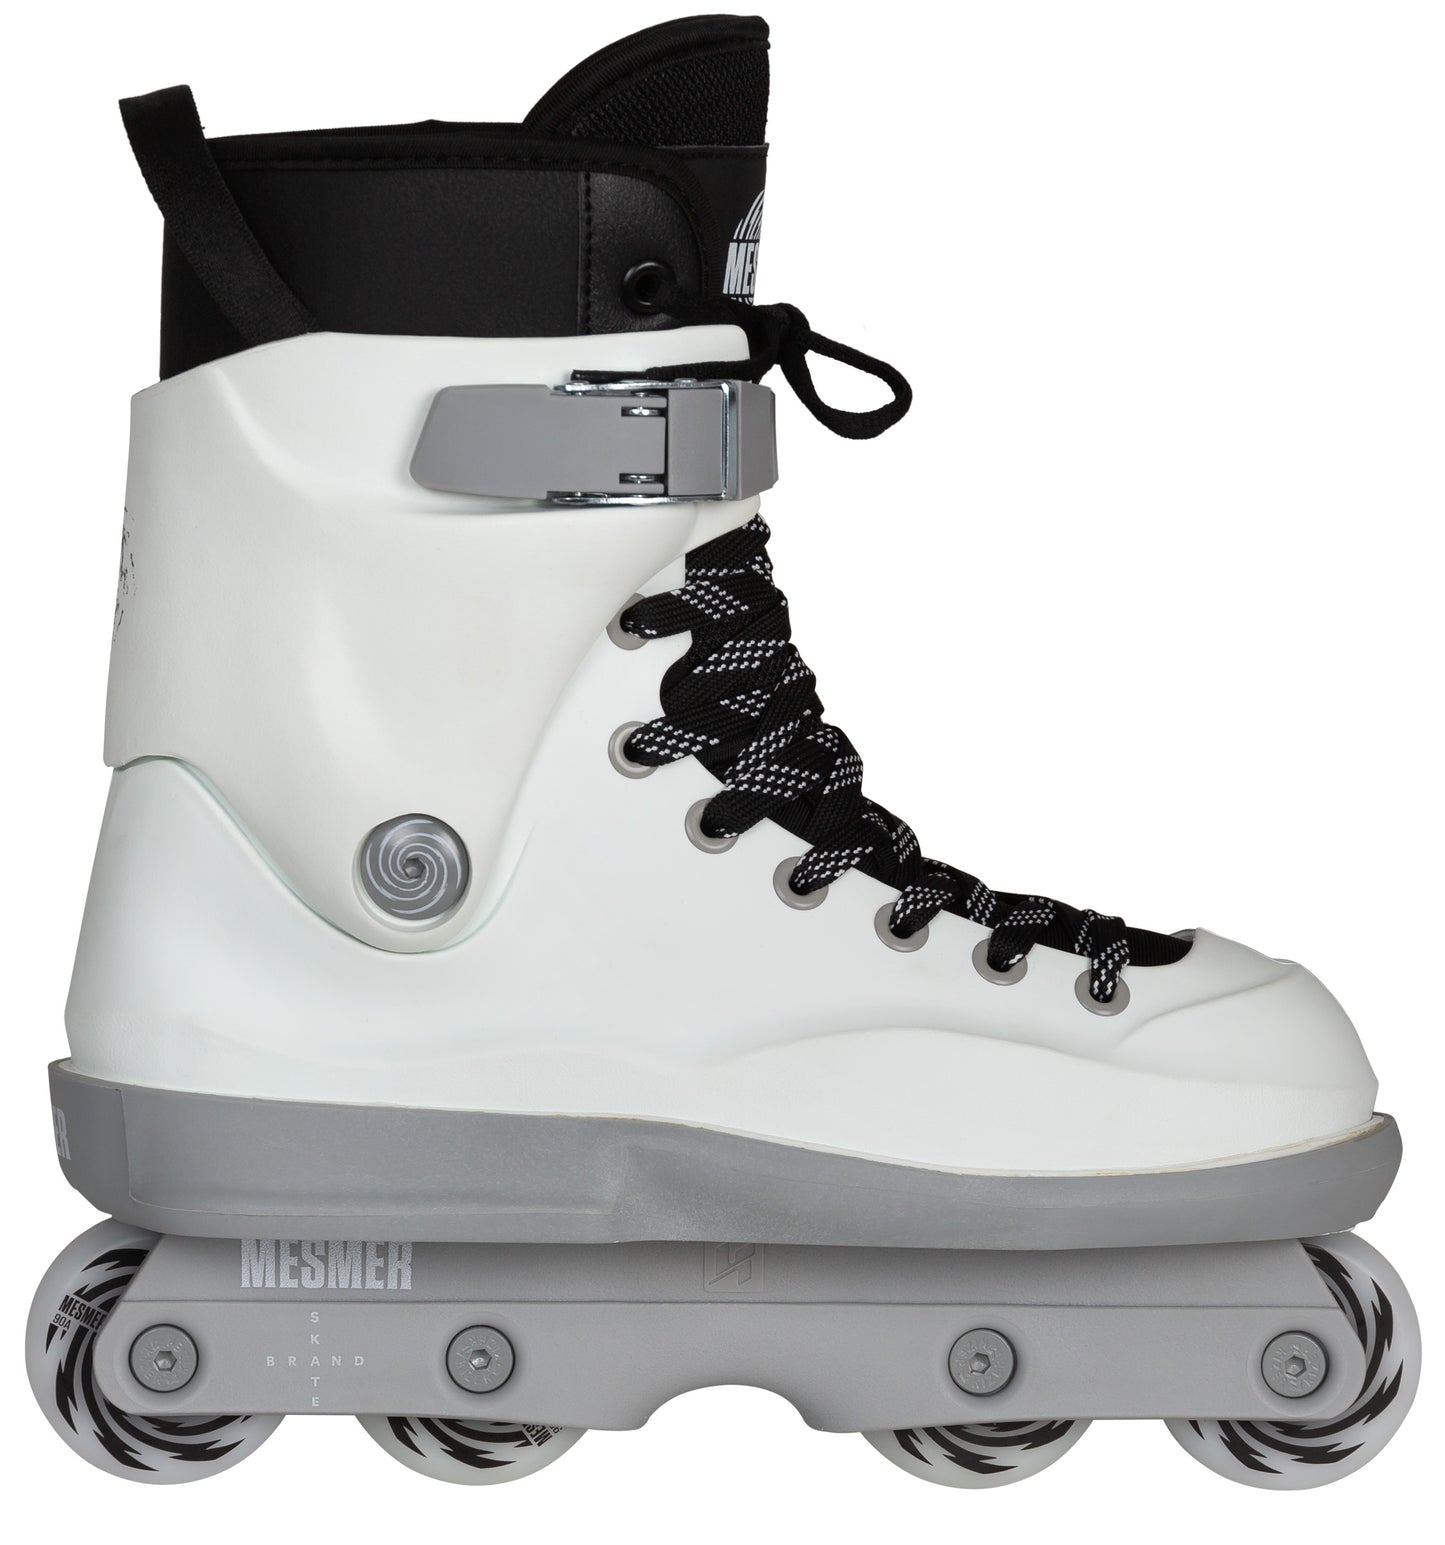 Team skate (TS1)